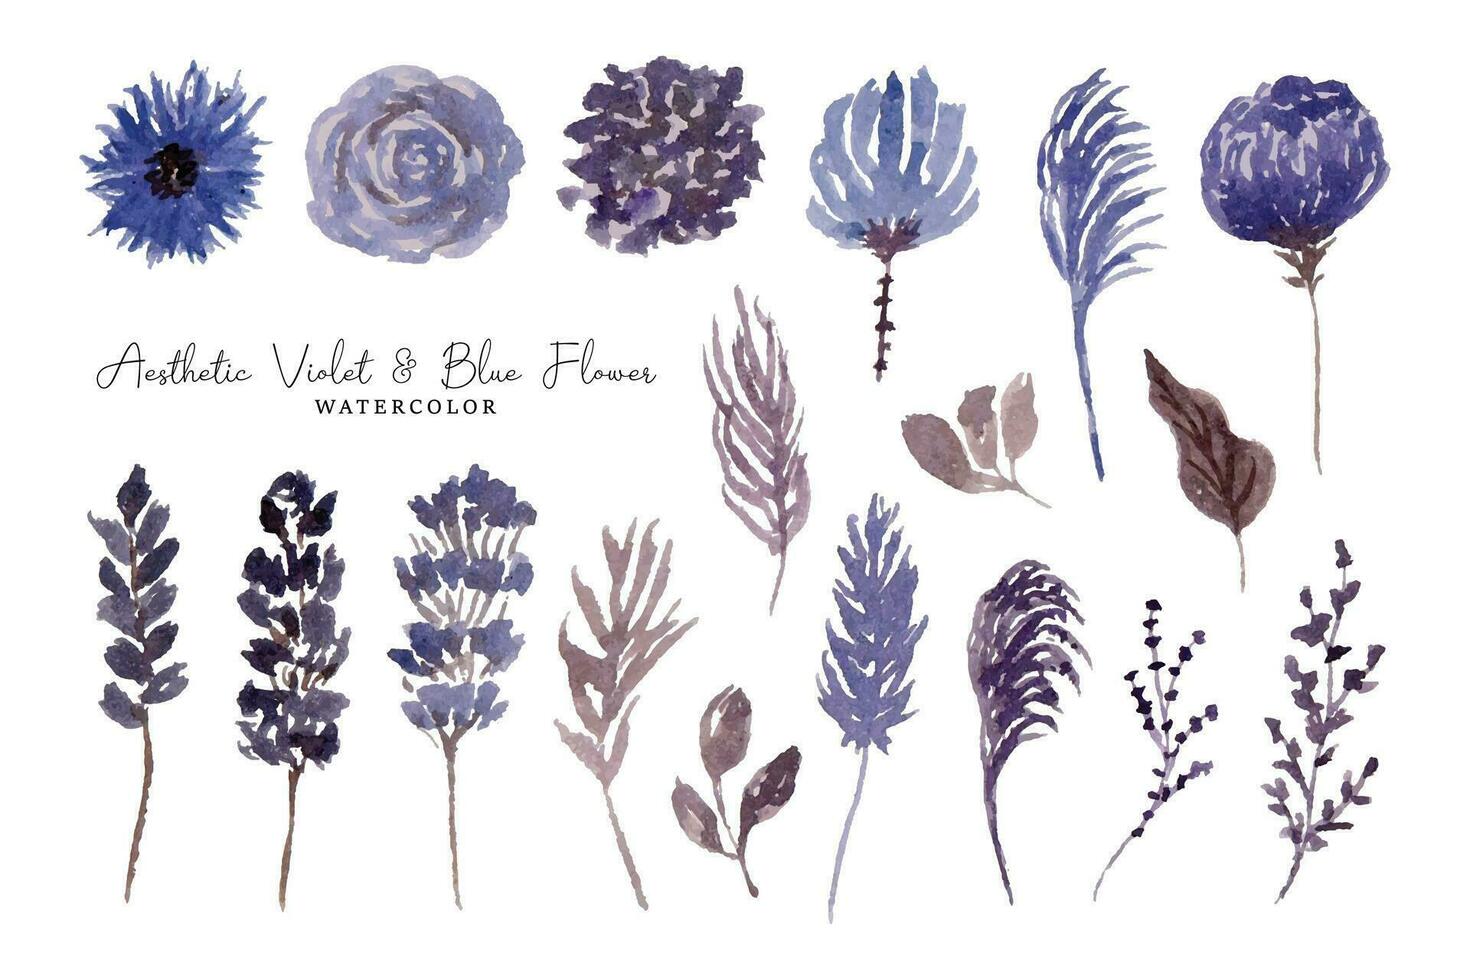 ästhetisch Blau getrocknet Blume Aquarell Sammlung vektor